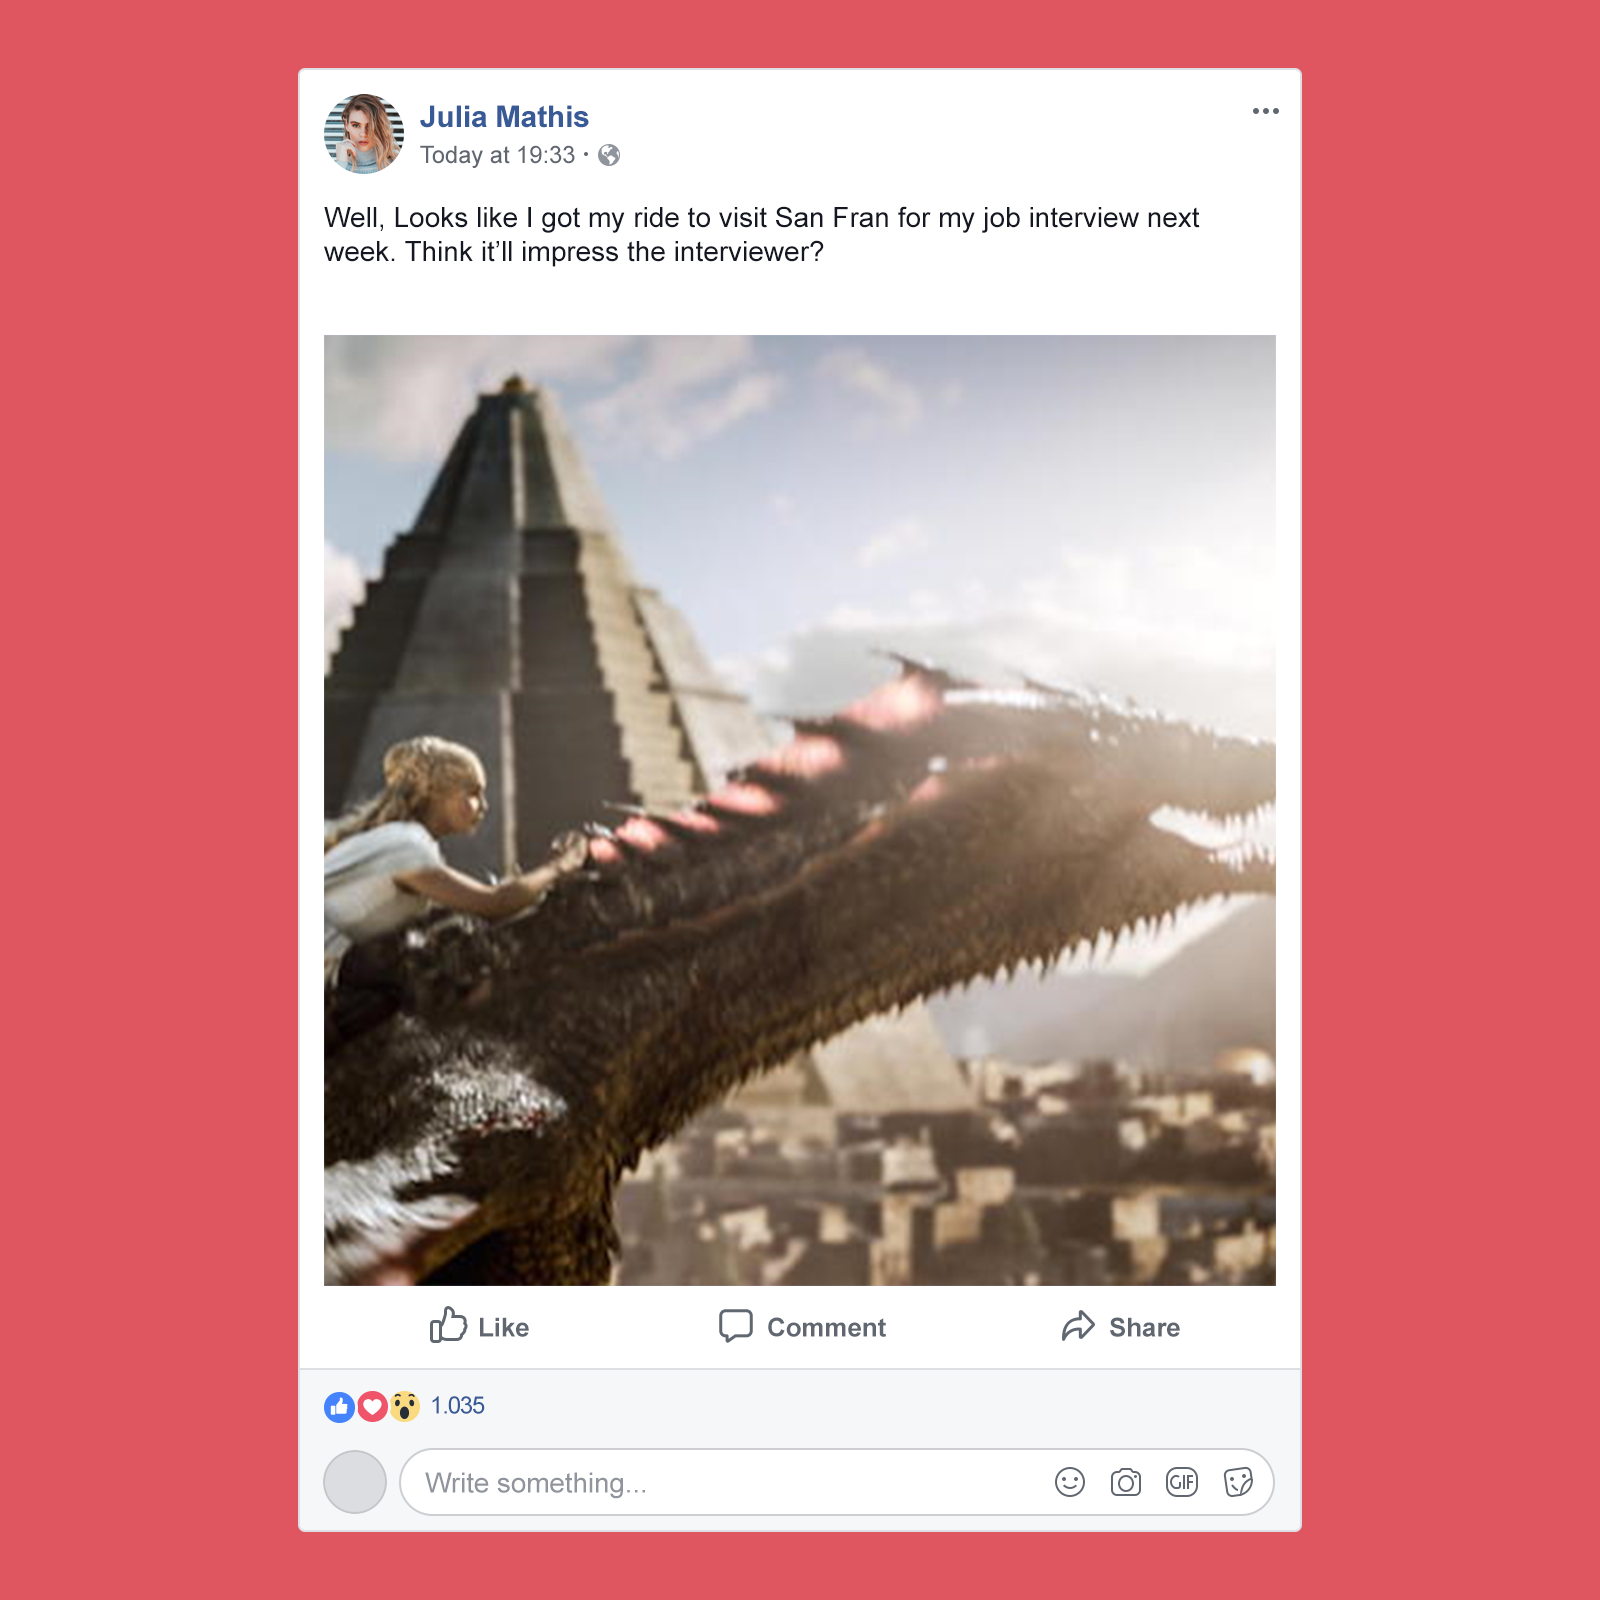  Publication Facebook de Game of Thrones - Longue distance - Médias sociaux 